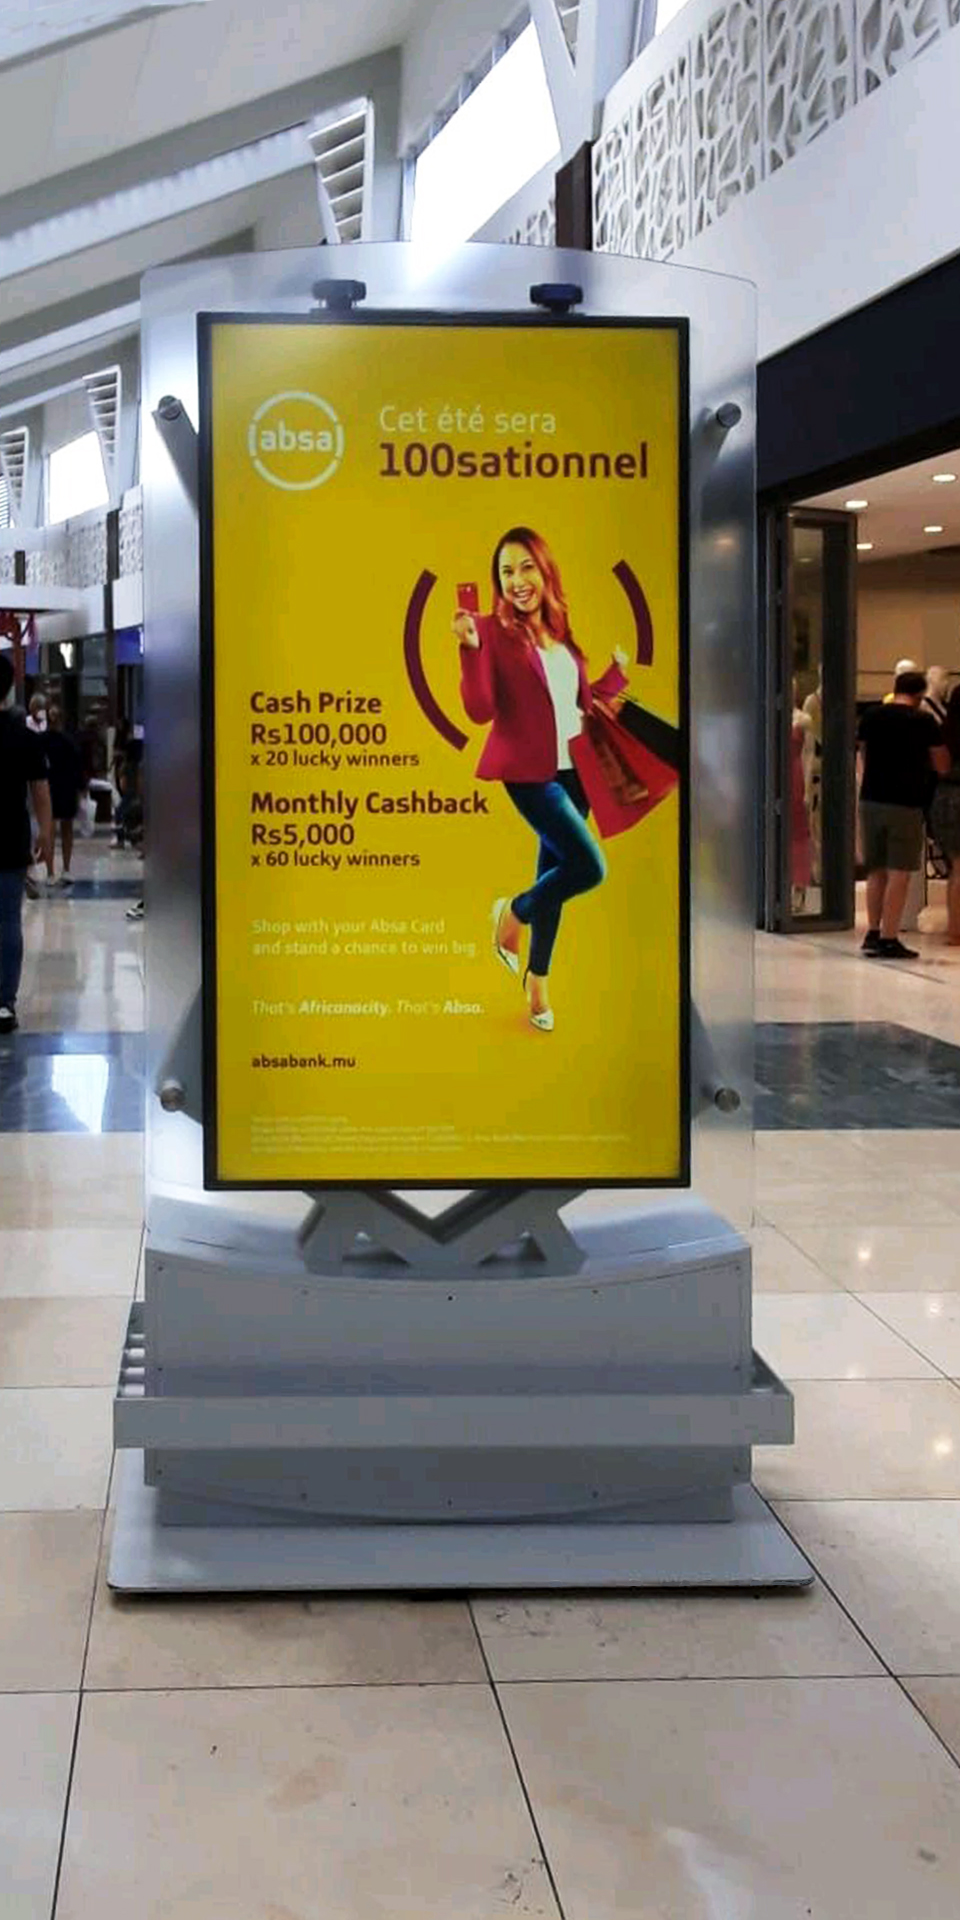 PARTTEAM & OEMKIOSKS digital billboard innovates communication in shopping center